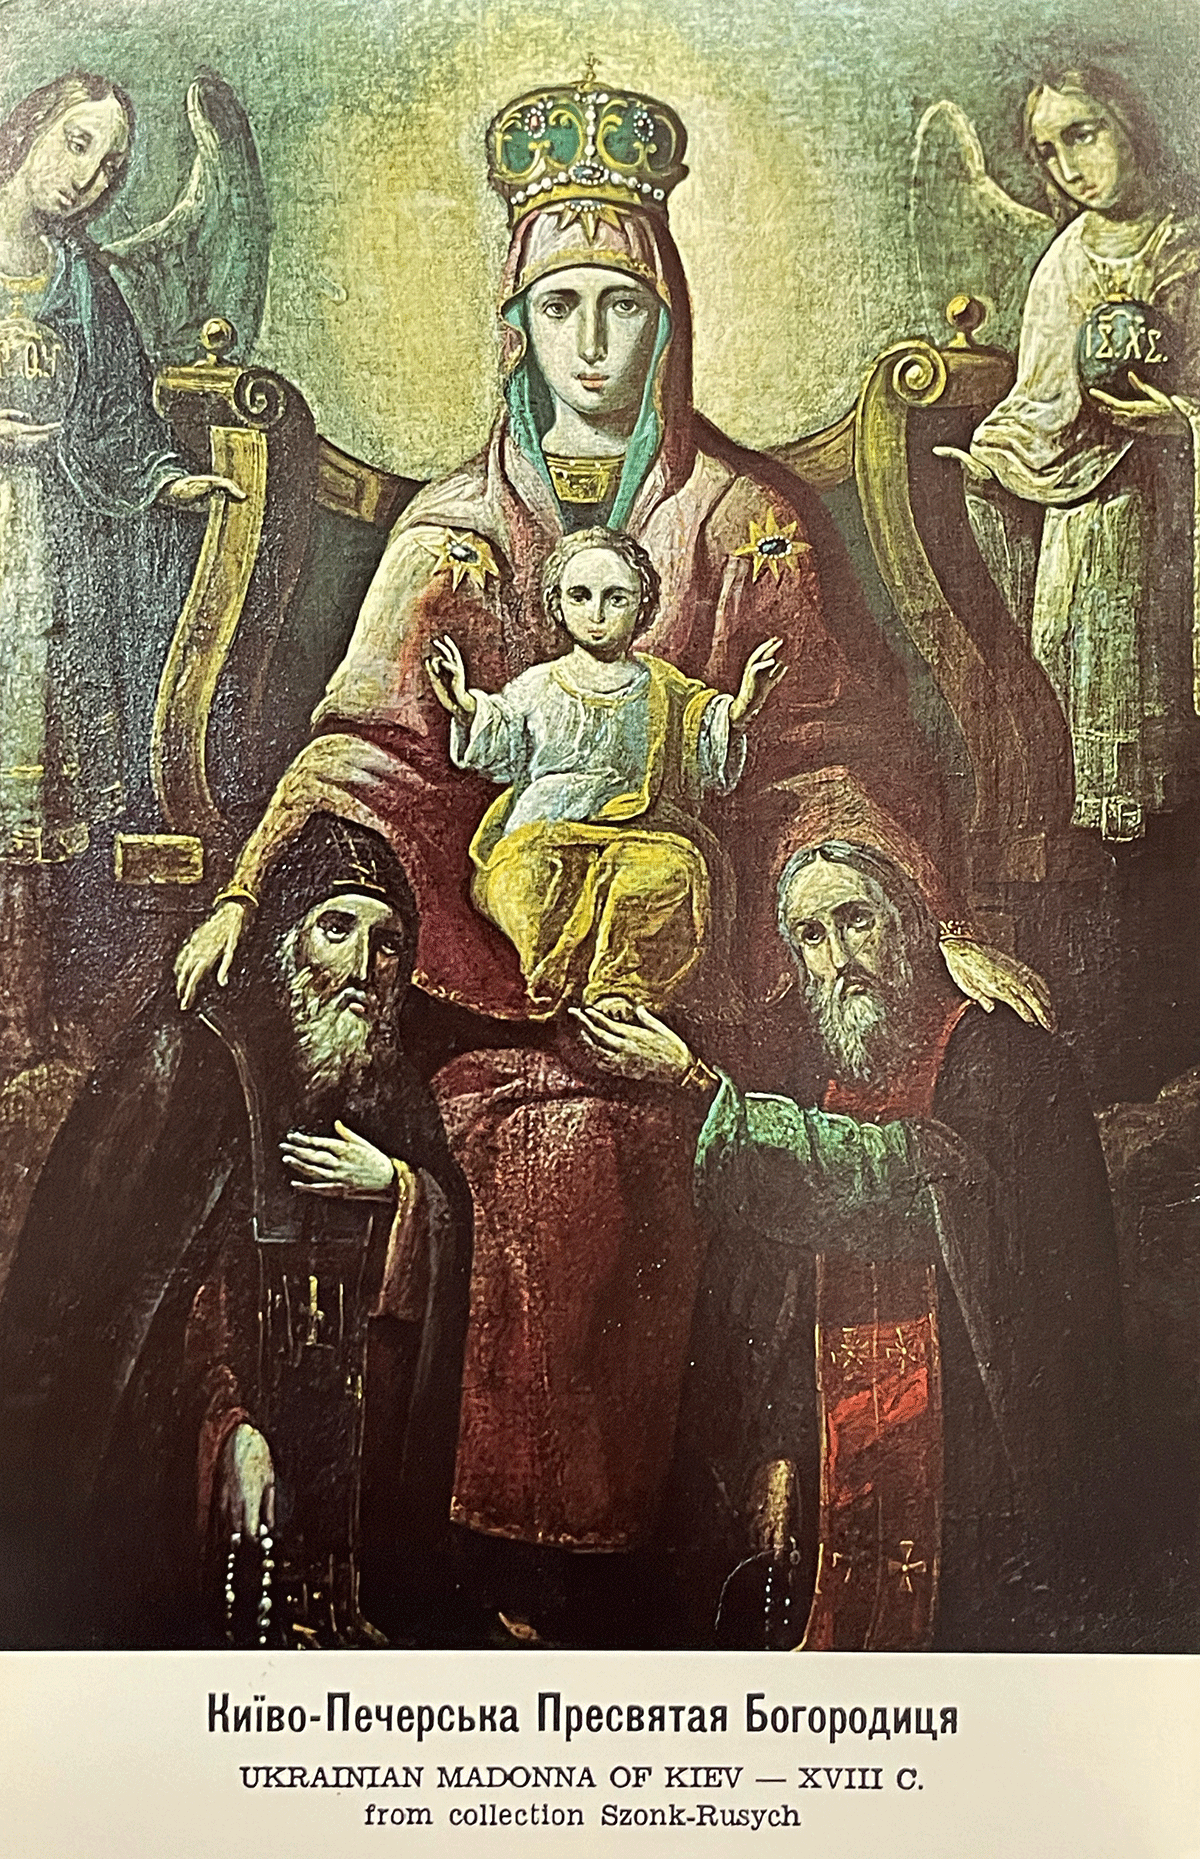 Ukrainian Madonna of Kyiv. Print reproduction of an 18th century painting.